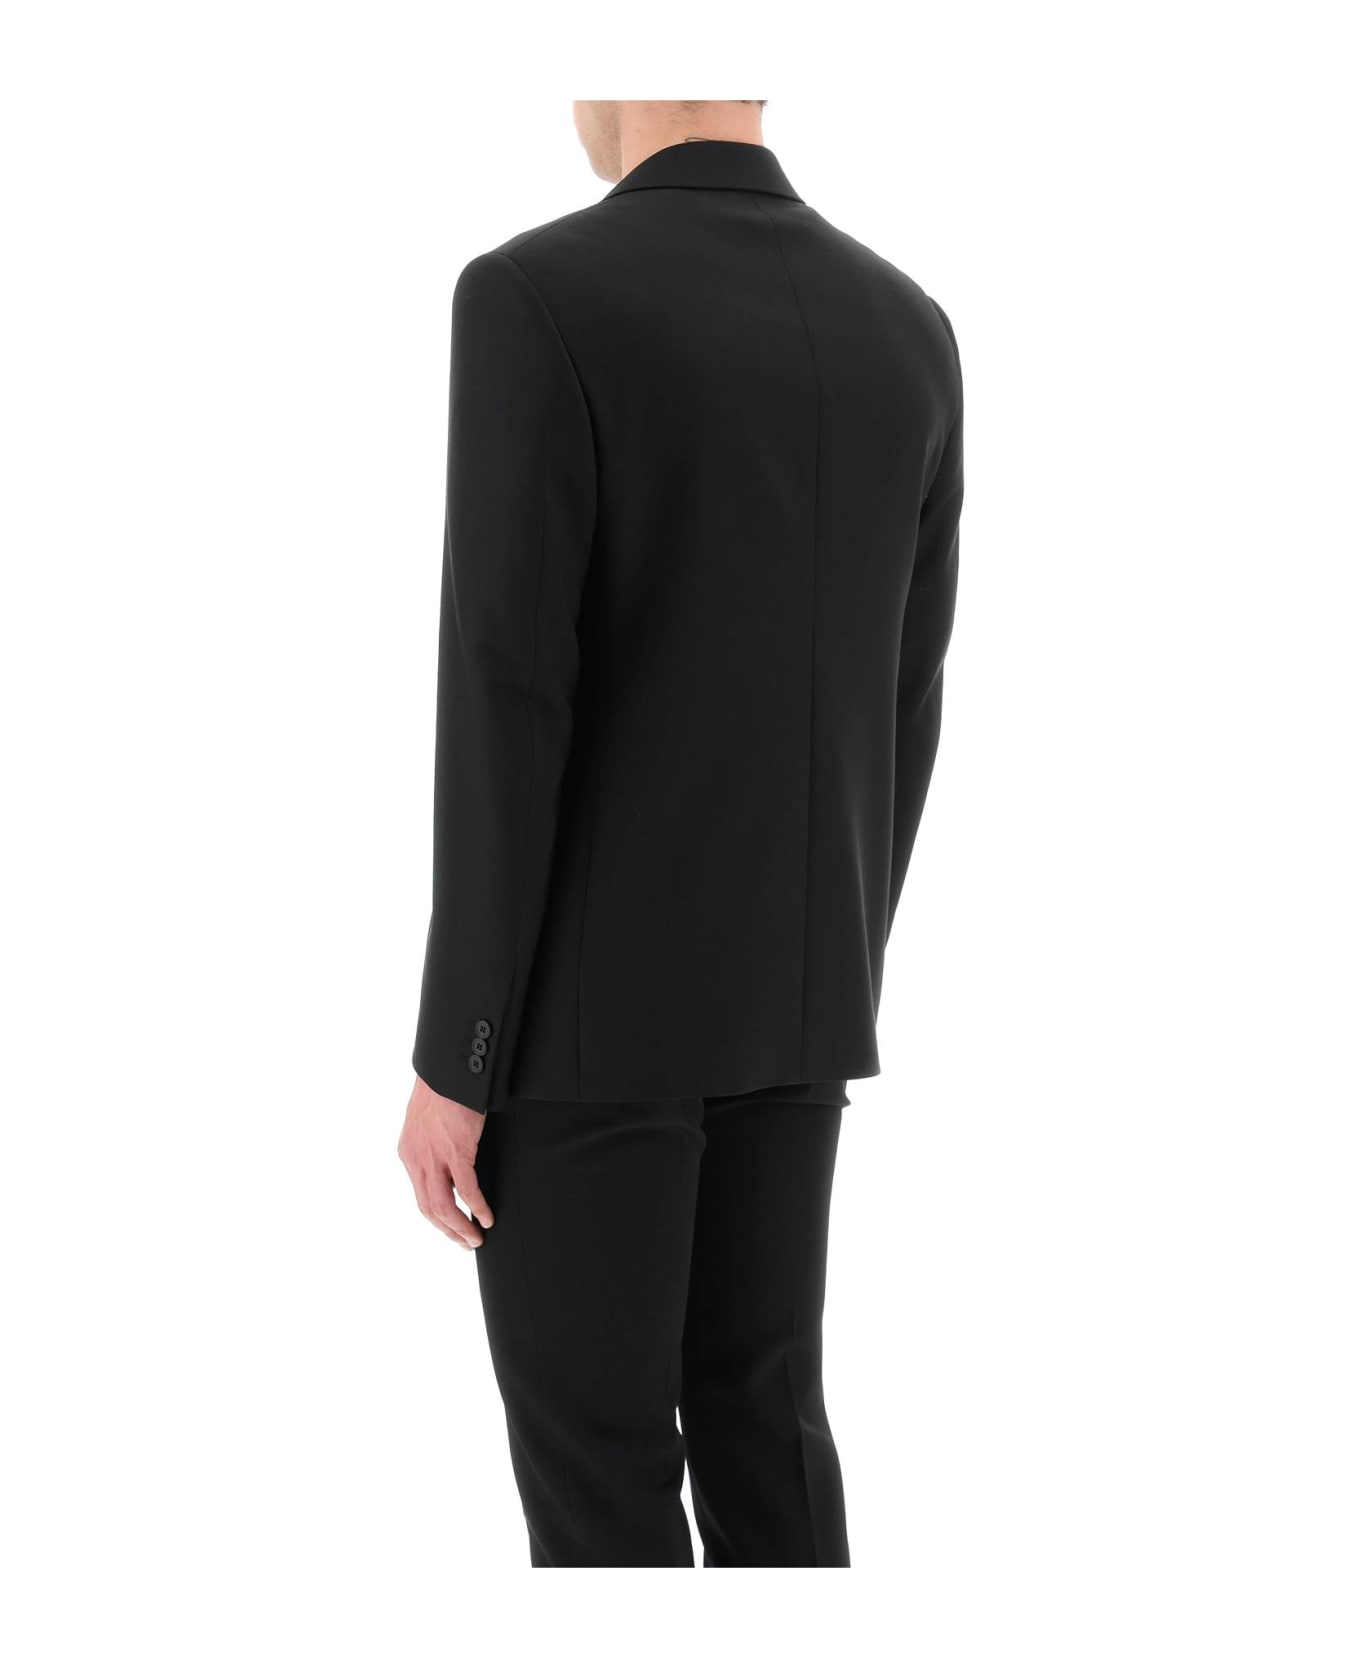 Off-White Blazer With Adjustable Mock Tie - BLACK (Black)